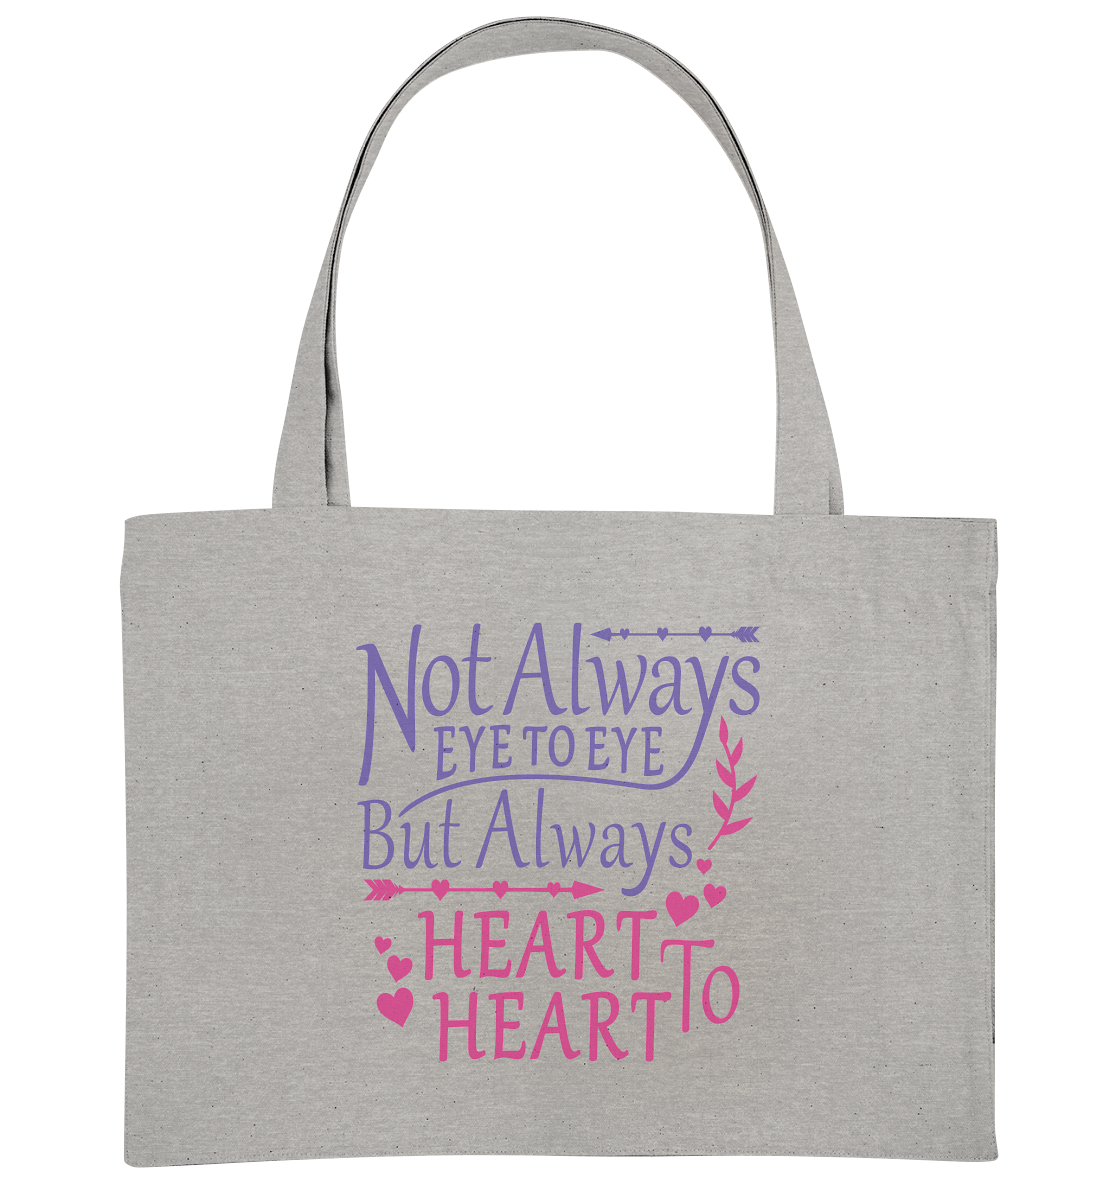 Not always eye to eye but always heart to heart - Organic Shopping-Bag